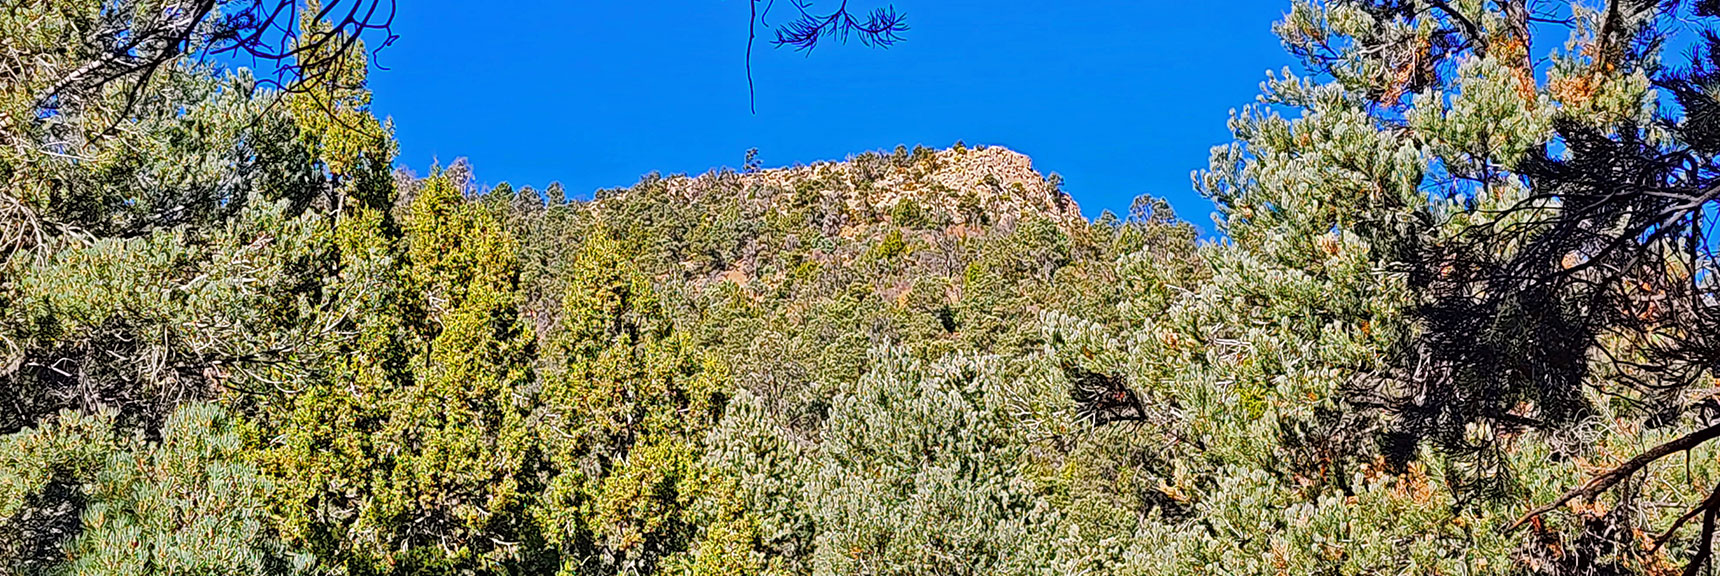 Handy Peak Through Trees. Lovell Canyon Loop Circles Handy Peak | Lovell Canyon Loop Trail | Lovell Canyon Nevada